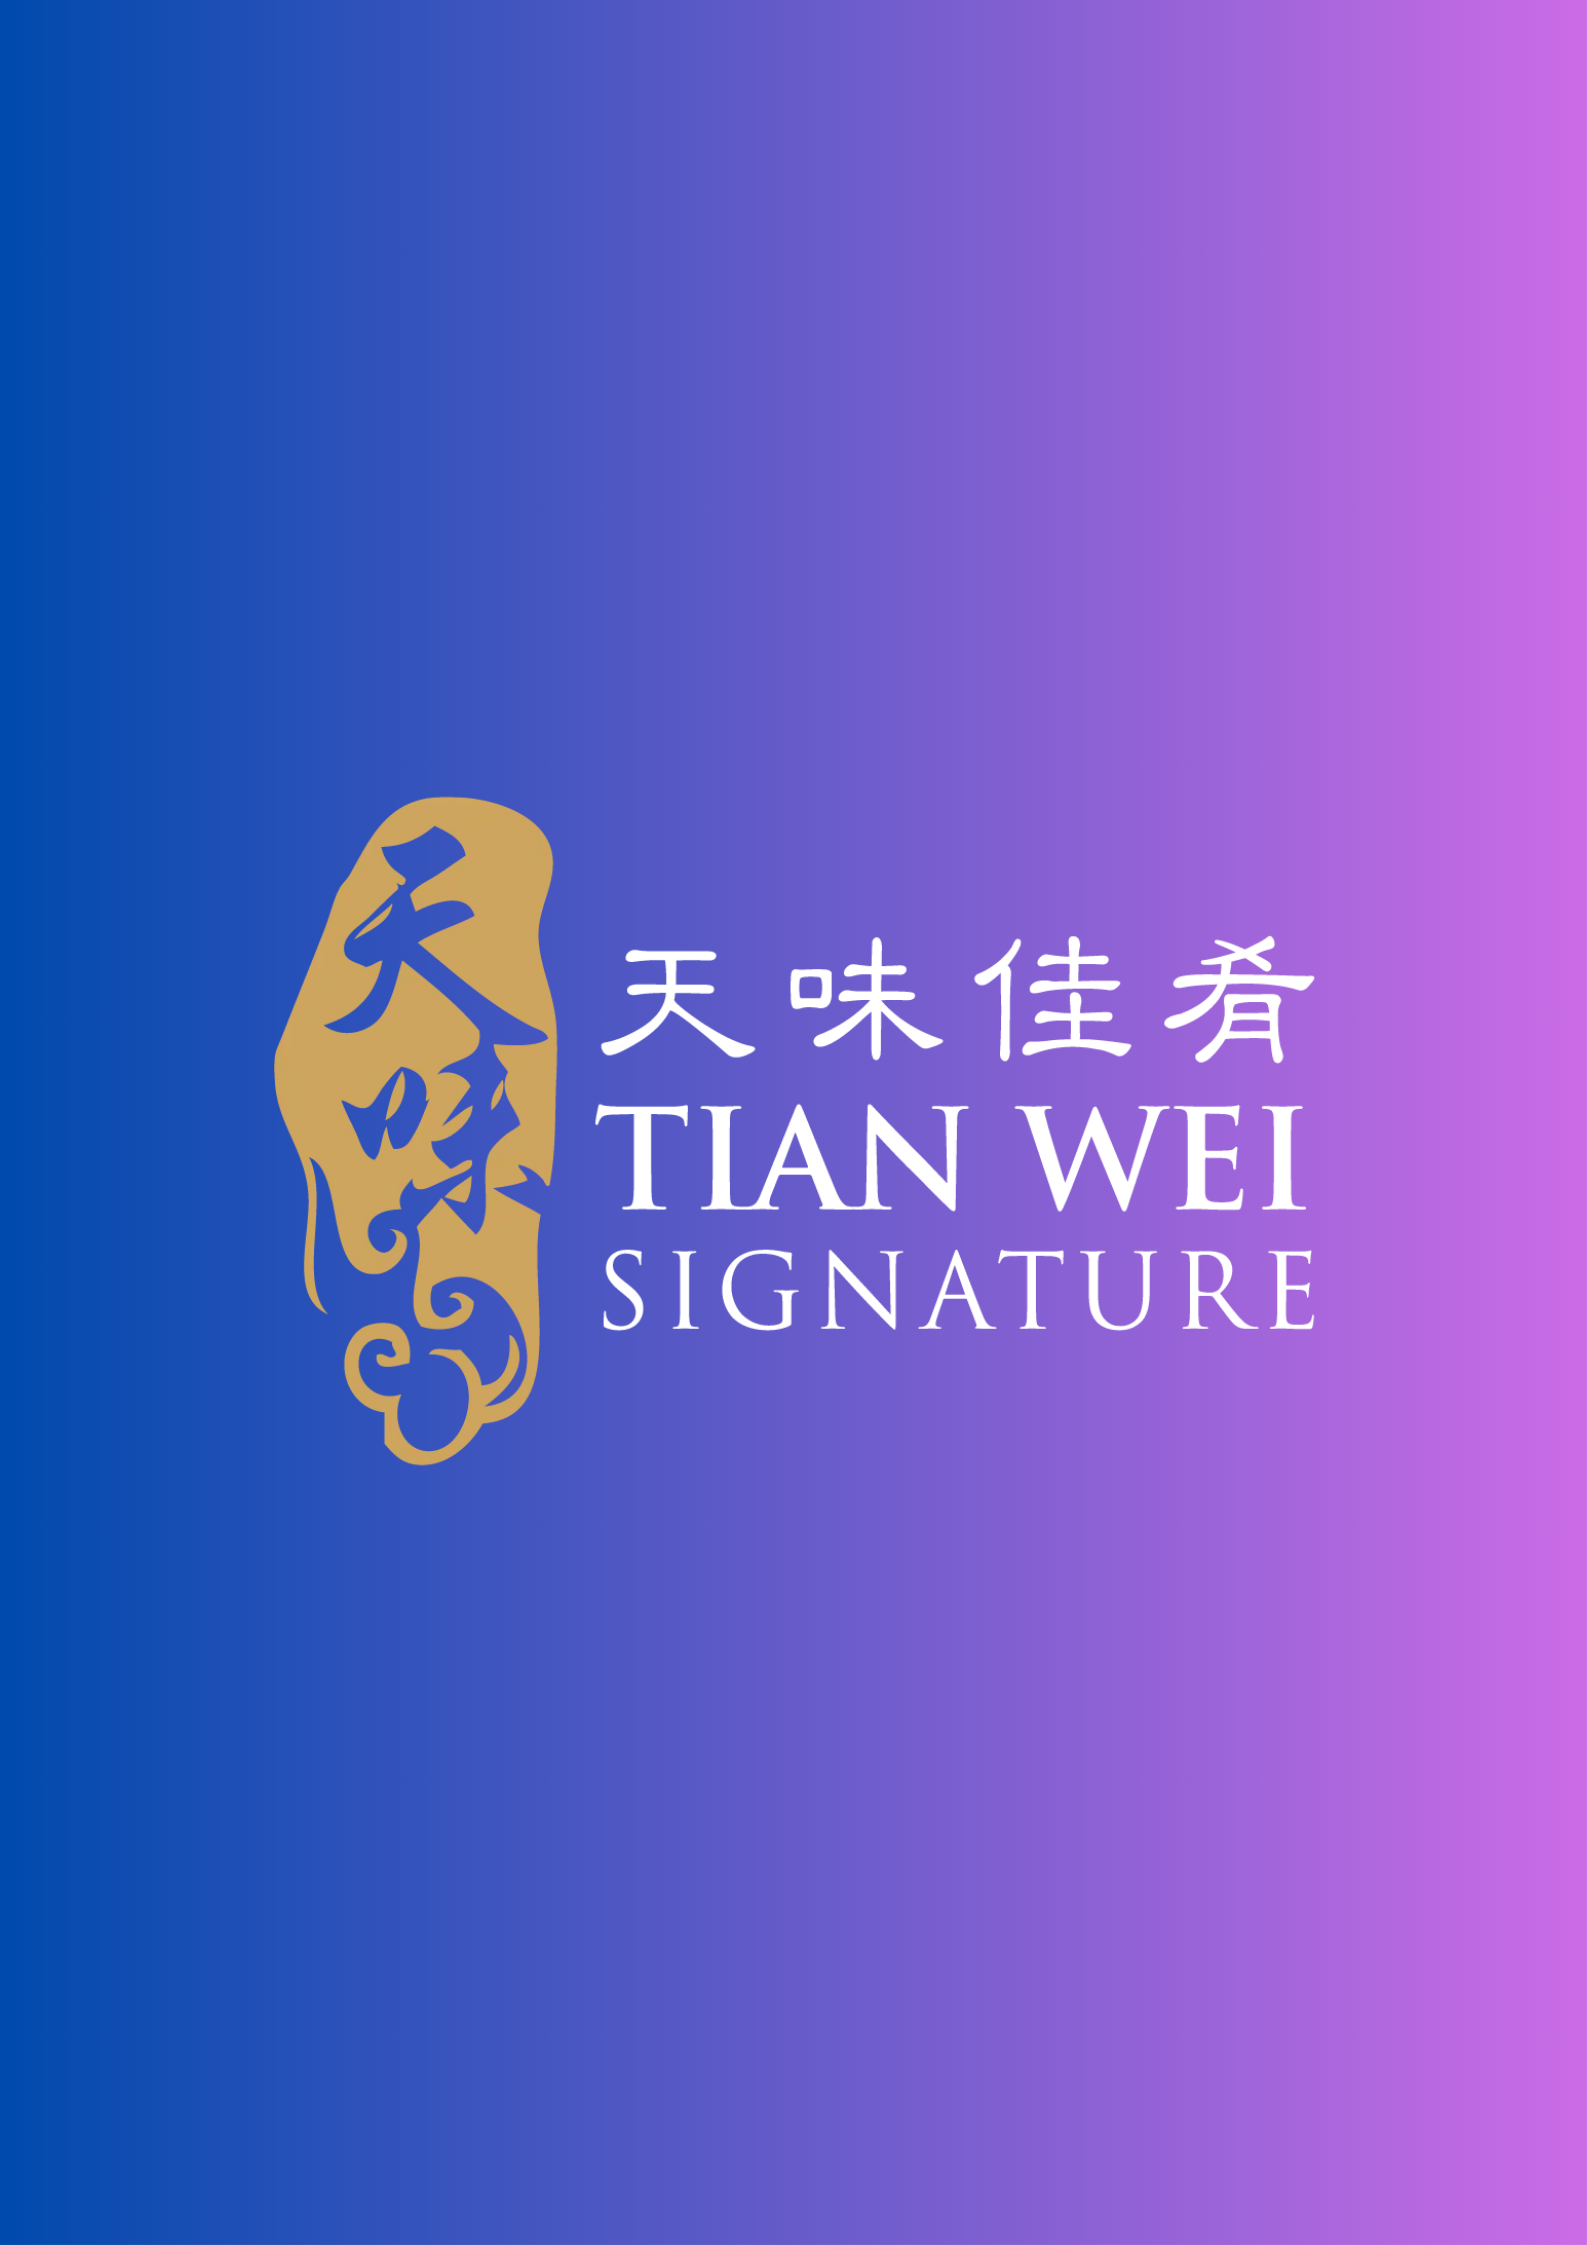 Avatar: tianwei signature